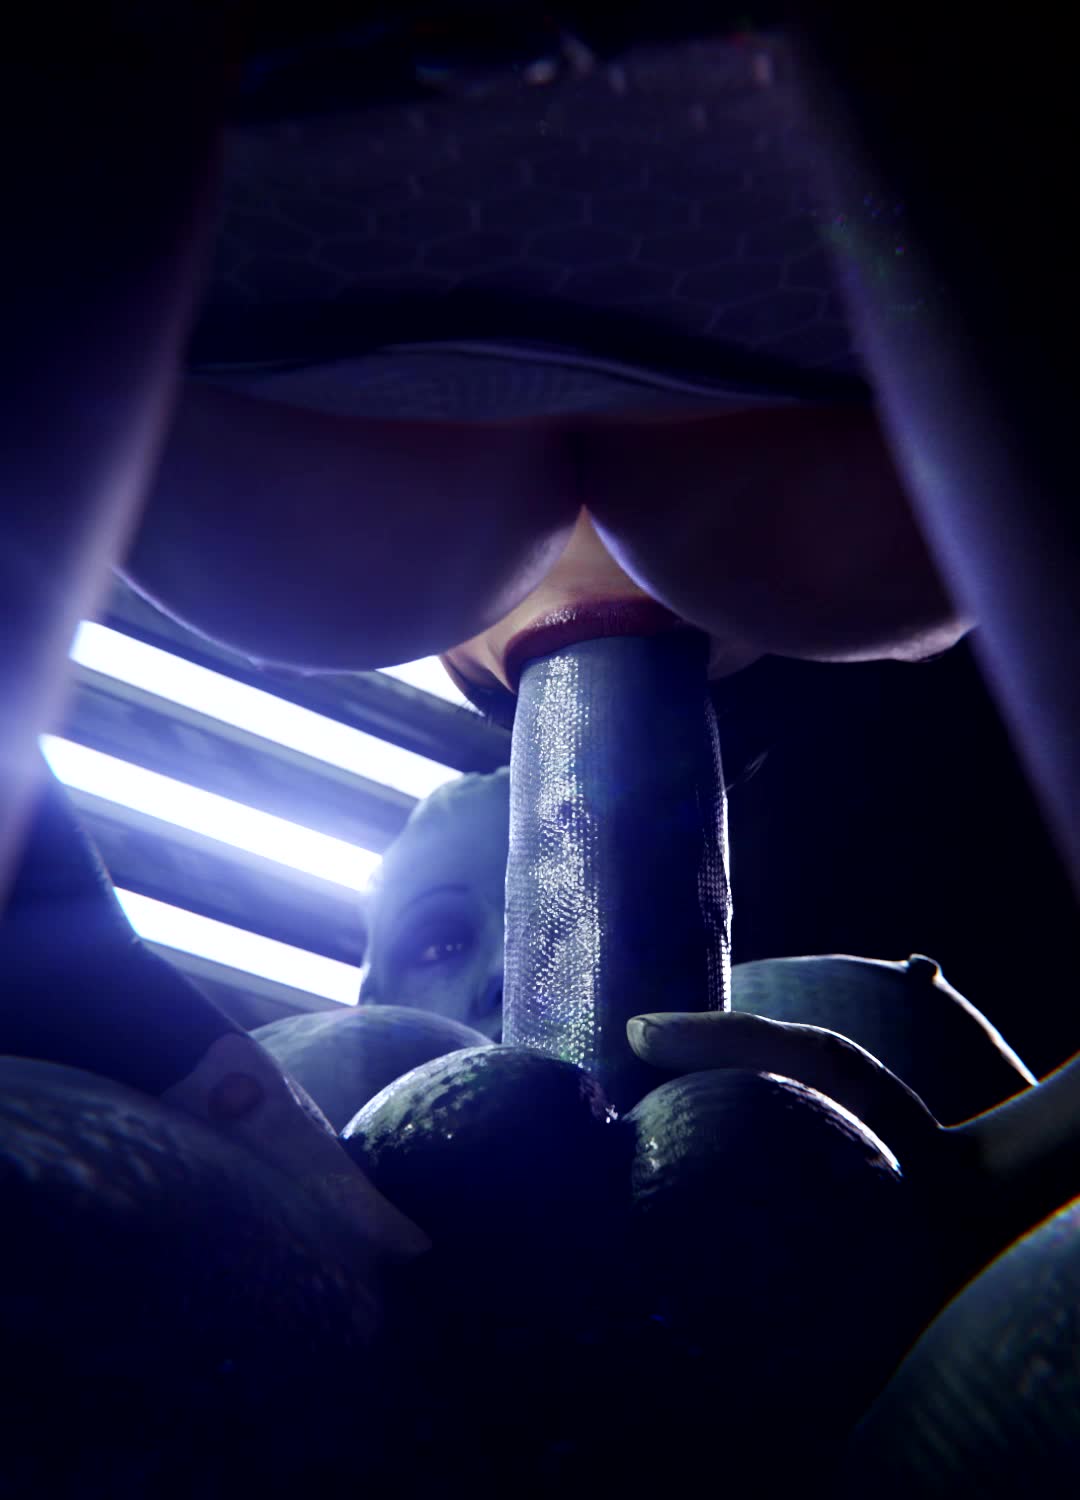 Miranda Lawson Gives Deepthroat Blowjob To Futanari Liara T’soni- Mass Effect NSFW animation thumbnail